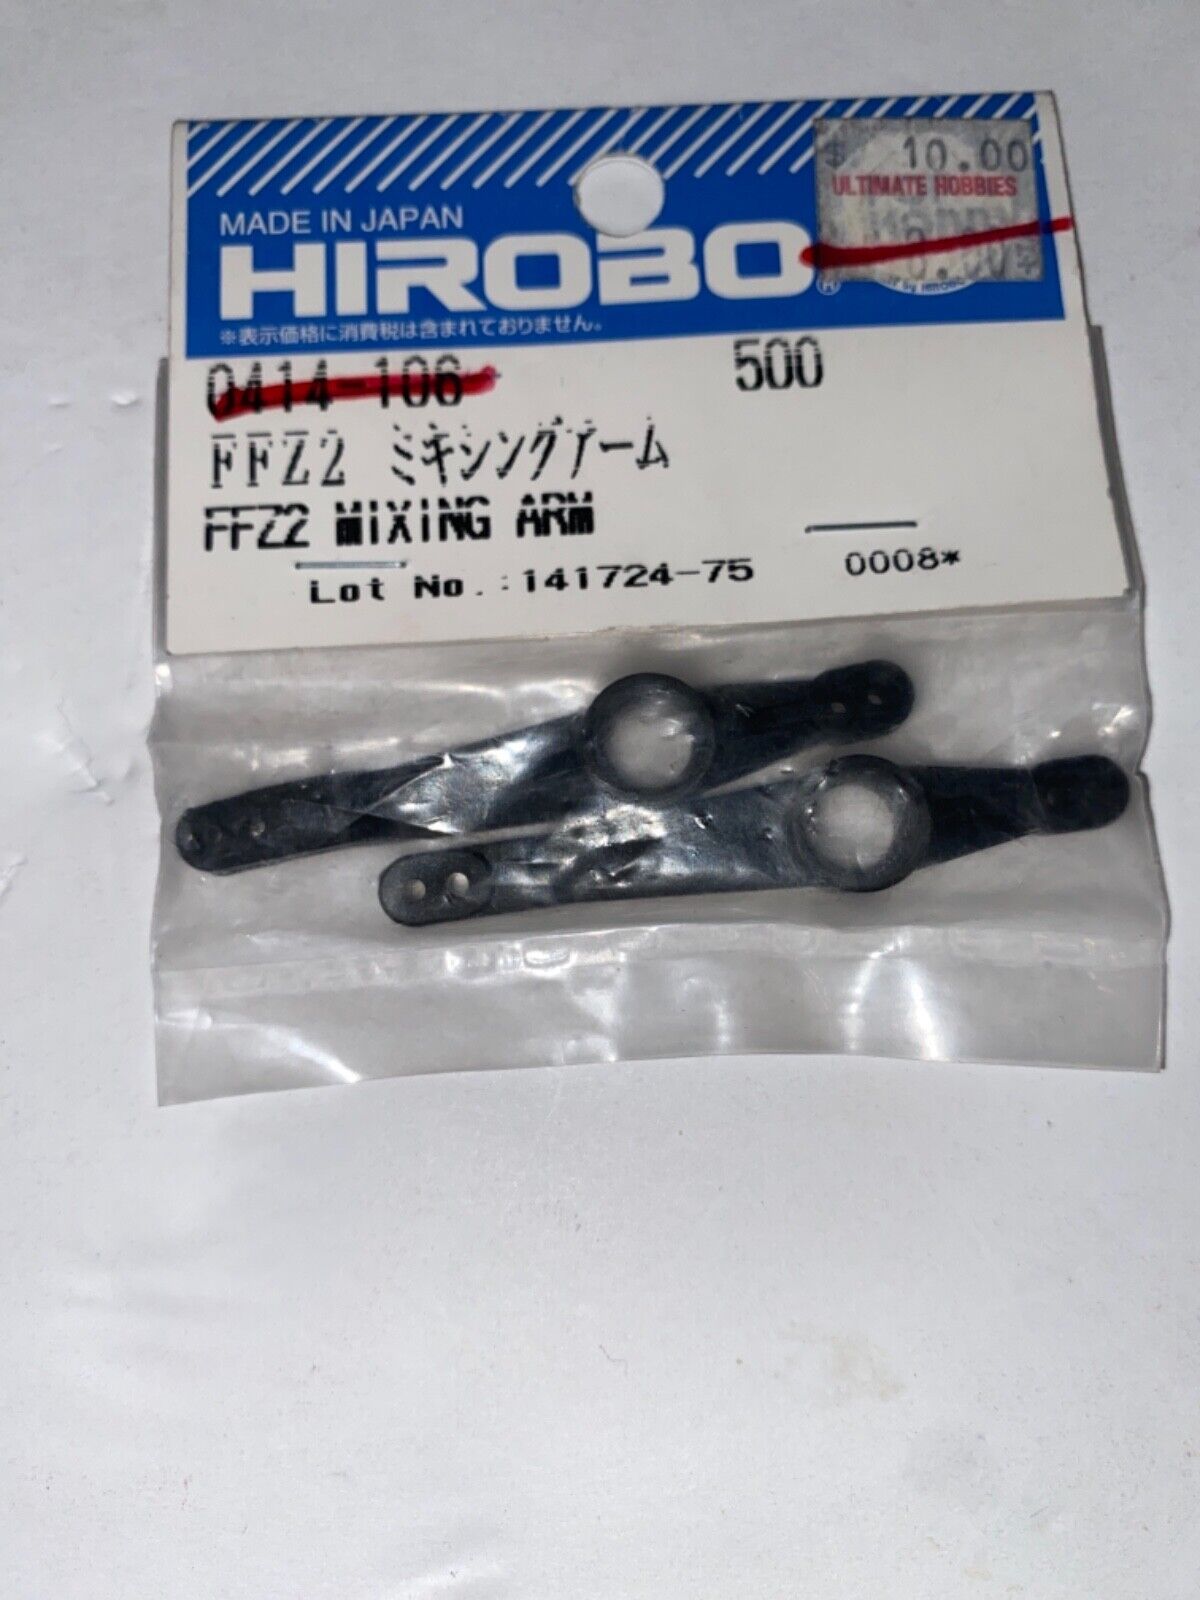 HIROBO FFZ2 Mixing Arm #0414-106